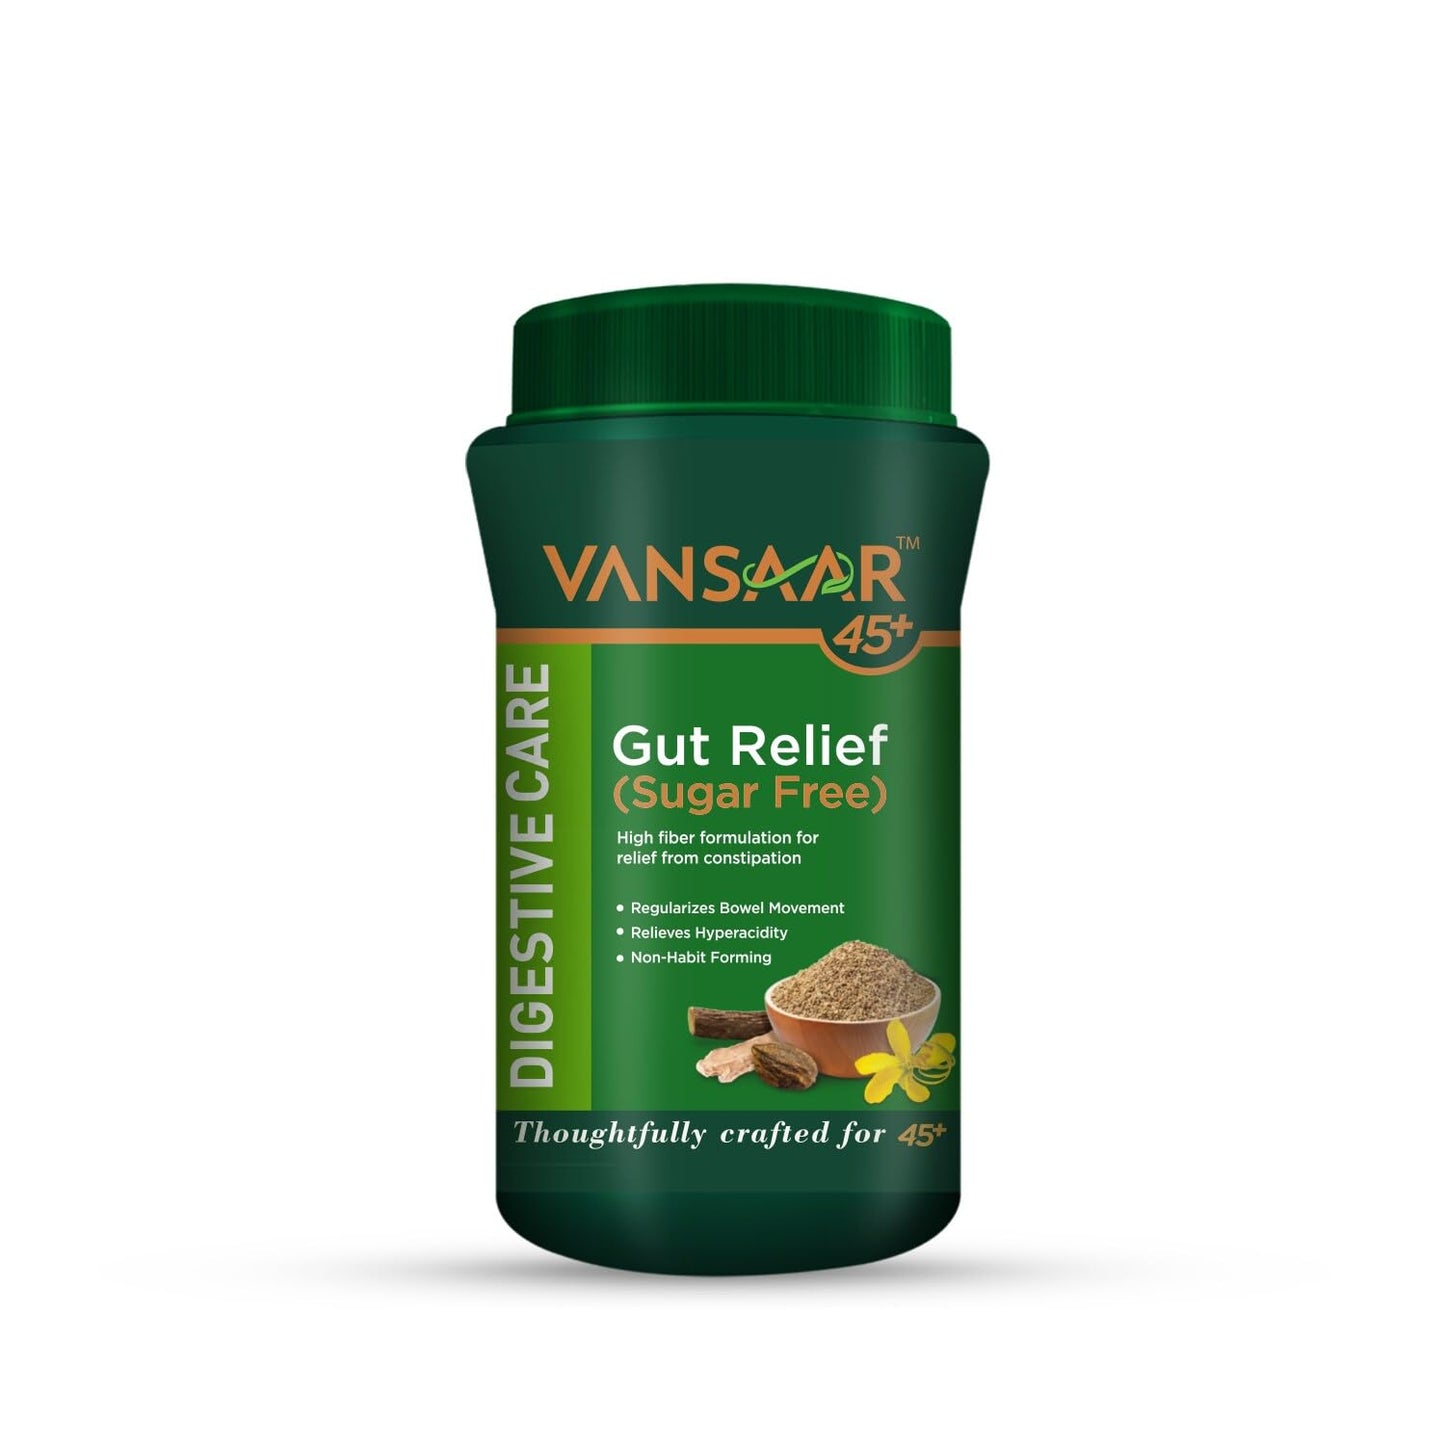 Vansaar Gut Relief Powder Sugar Free - buy in USA, Australia, Canada